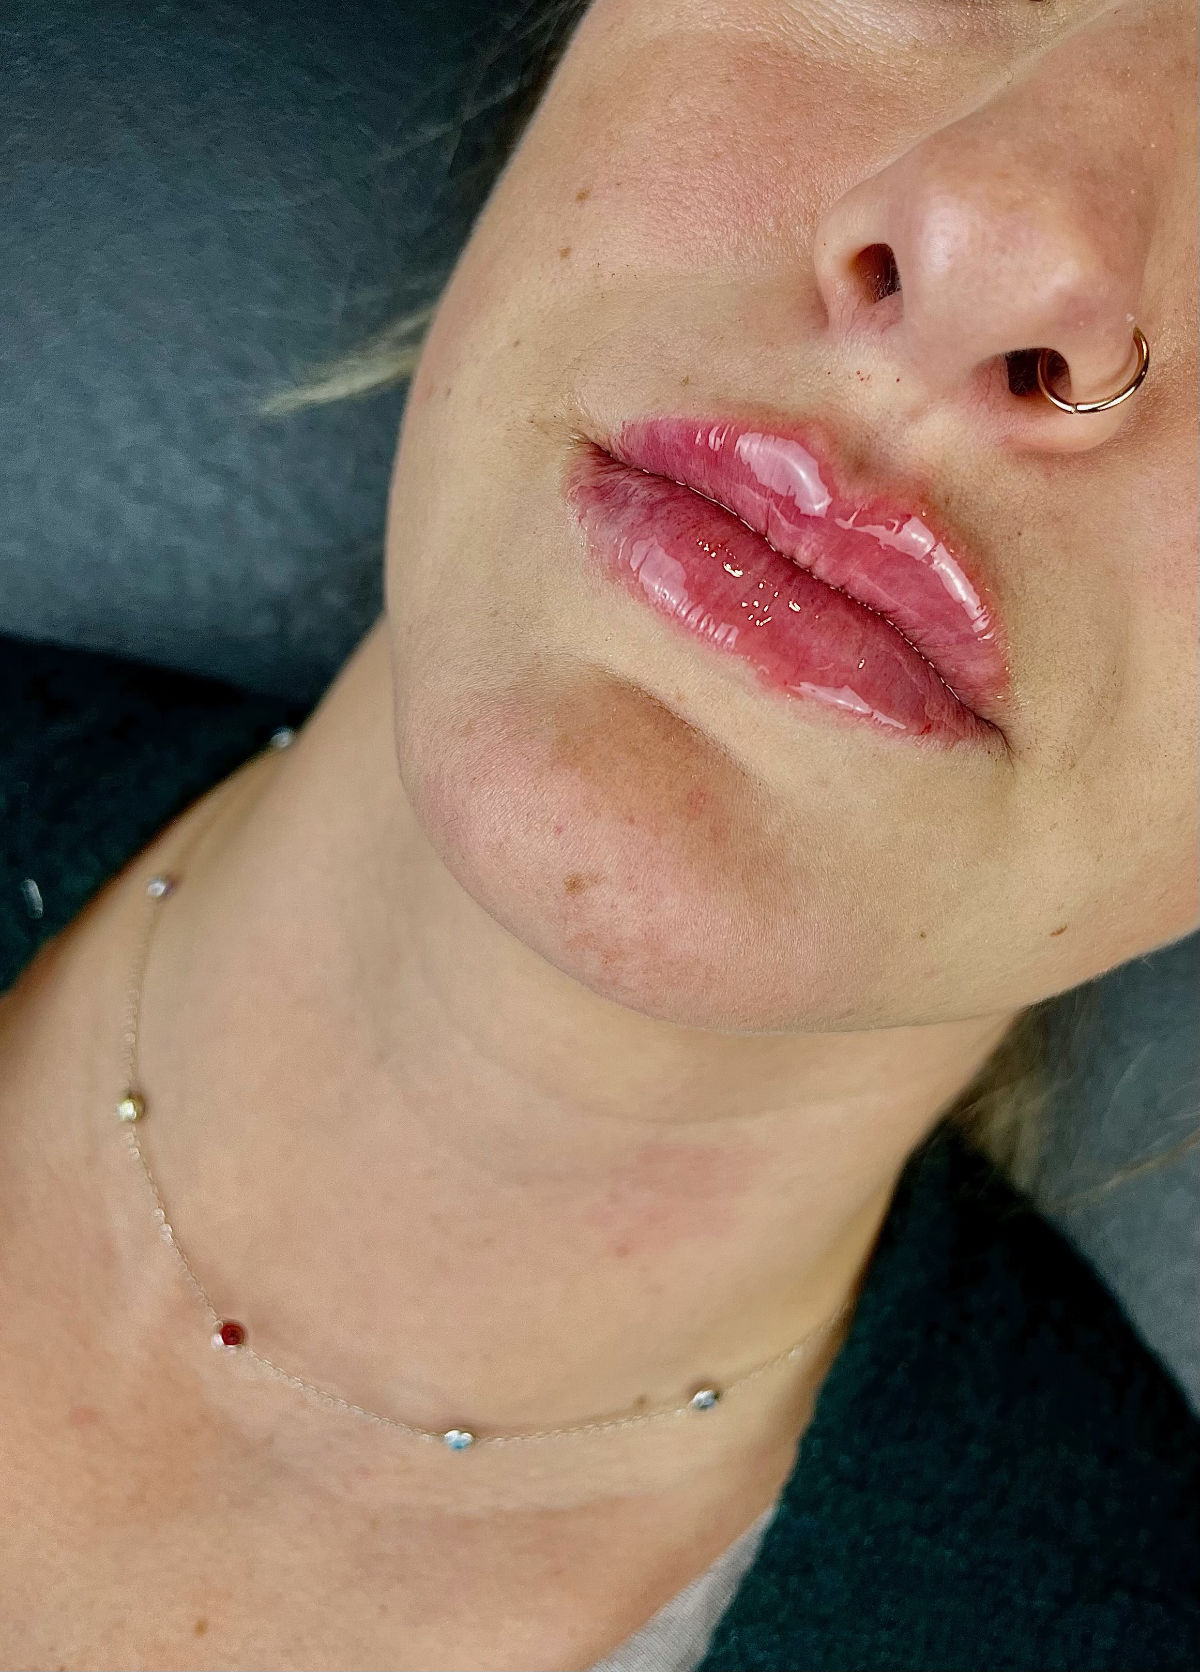 patient after lip filler procedure